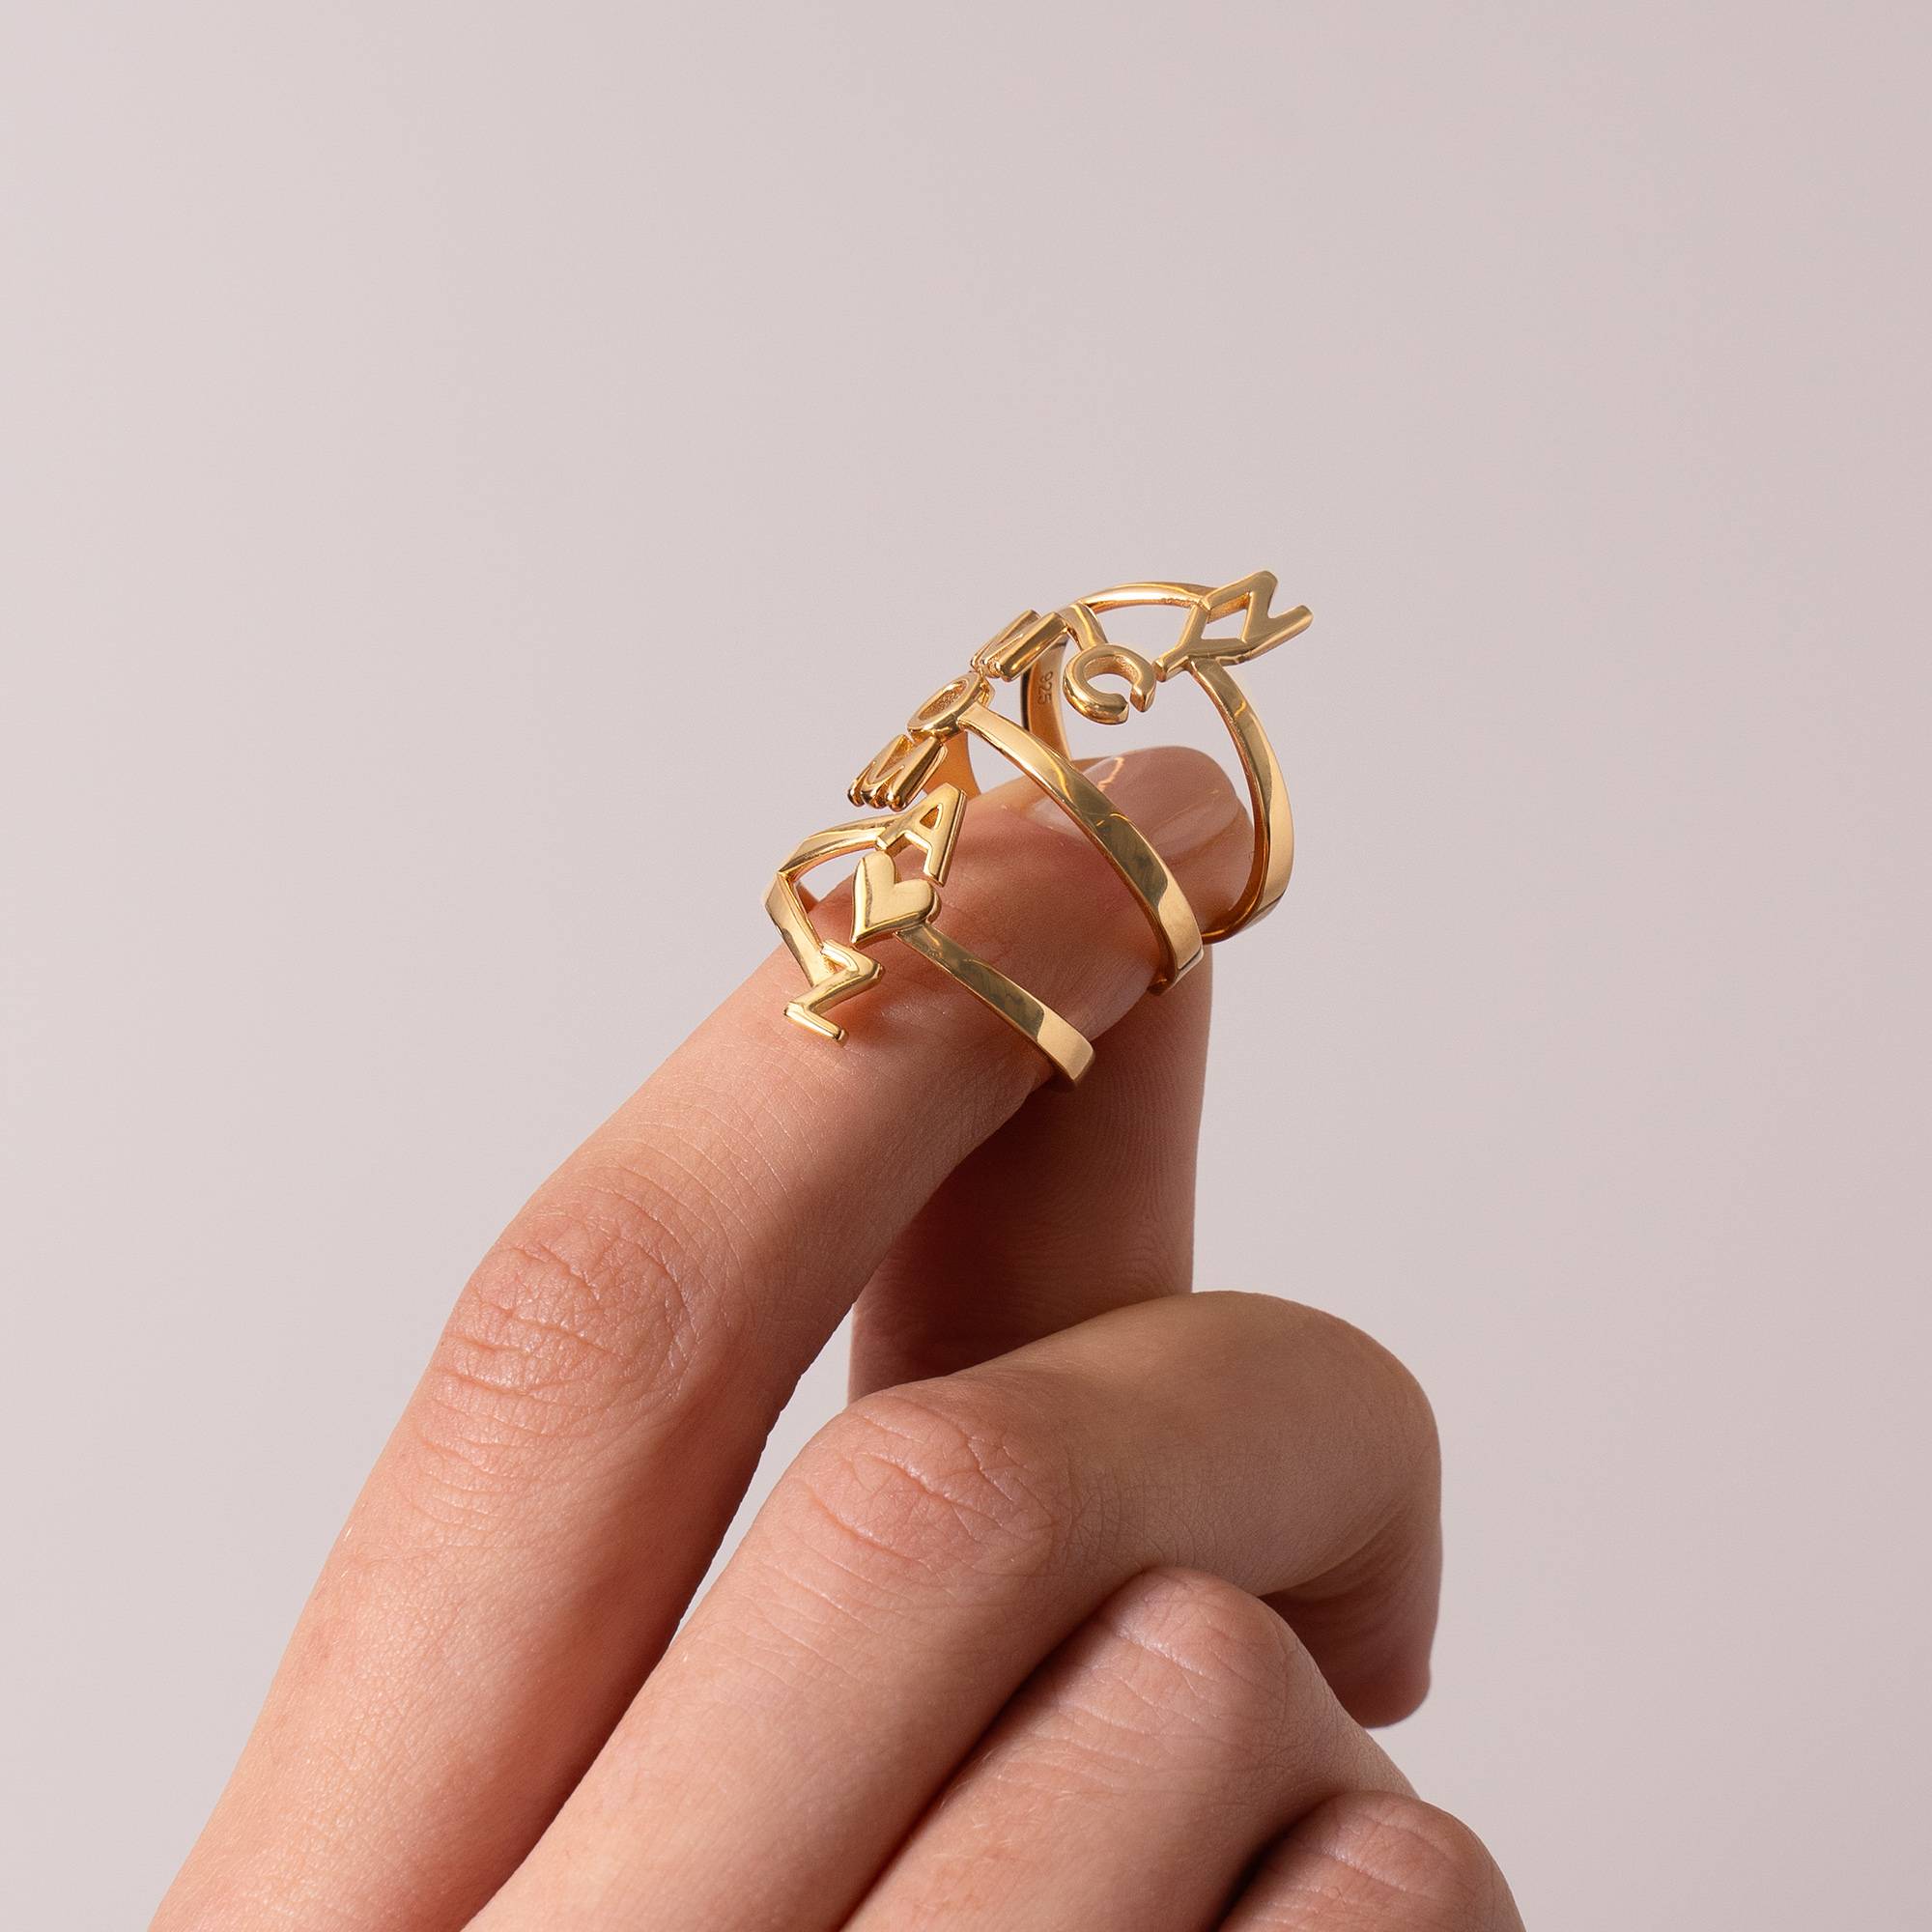 Drie Initialen Infinity Ring in 18k Goud Vermeil-1 Productfoto